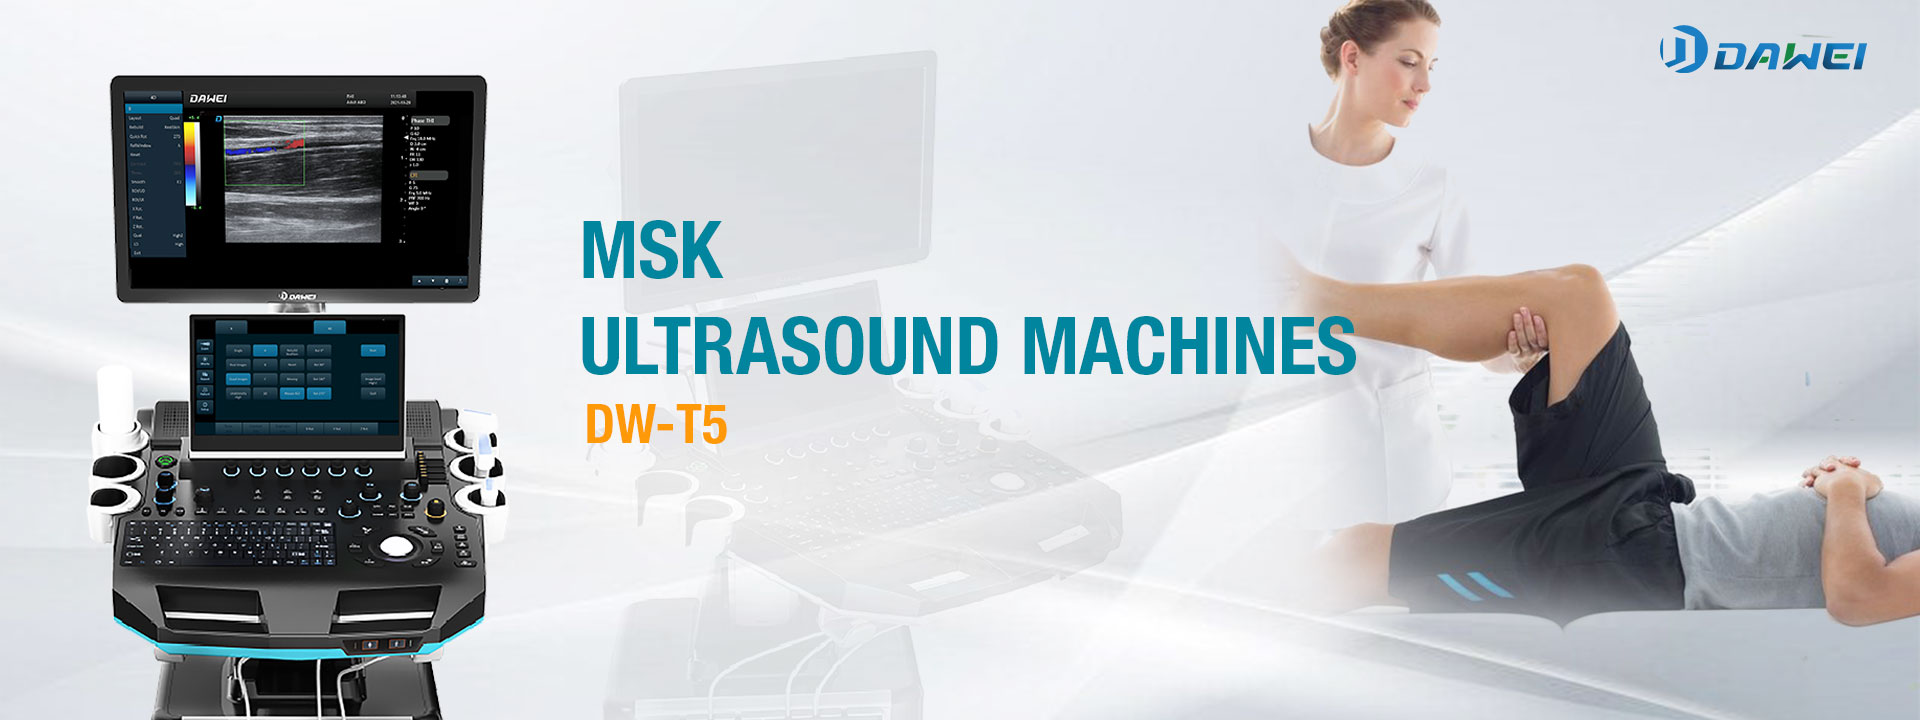 MSK Ultrasound Machines